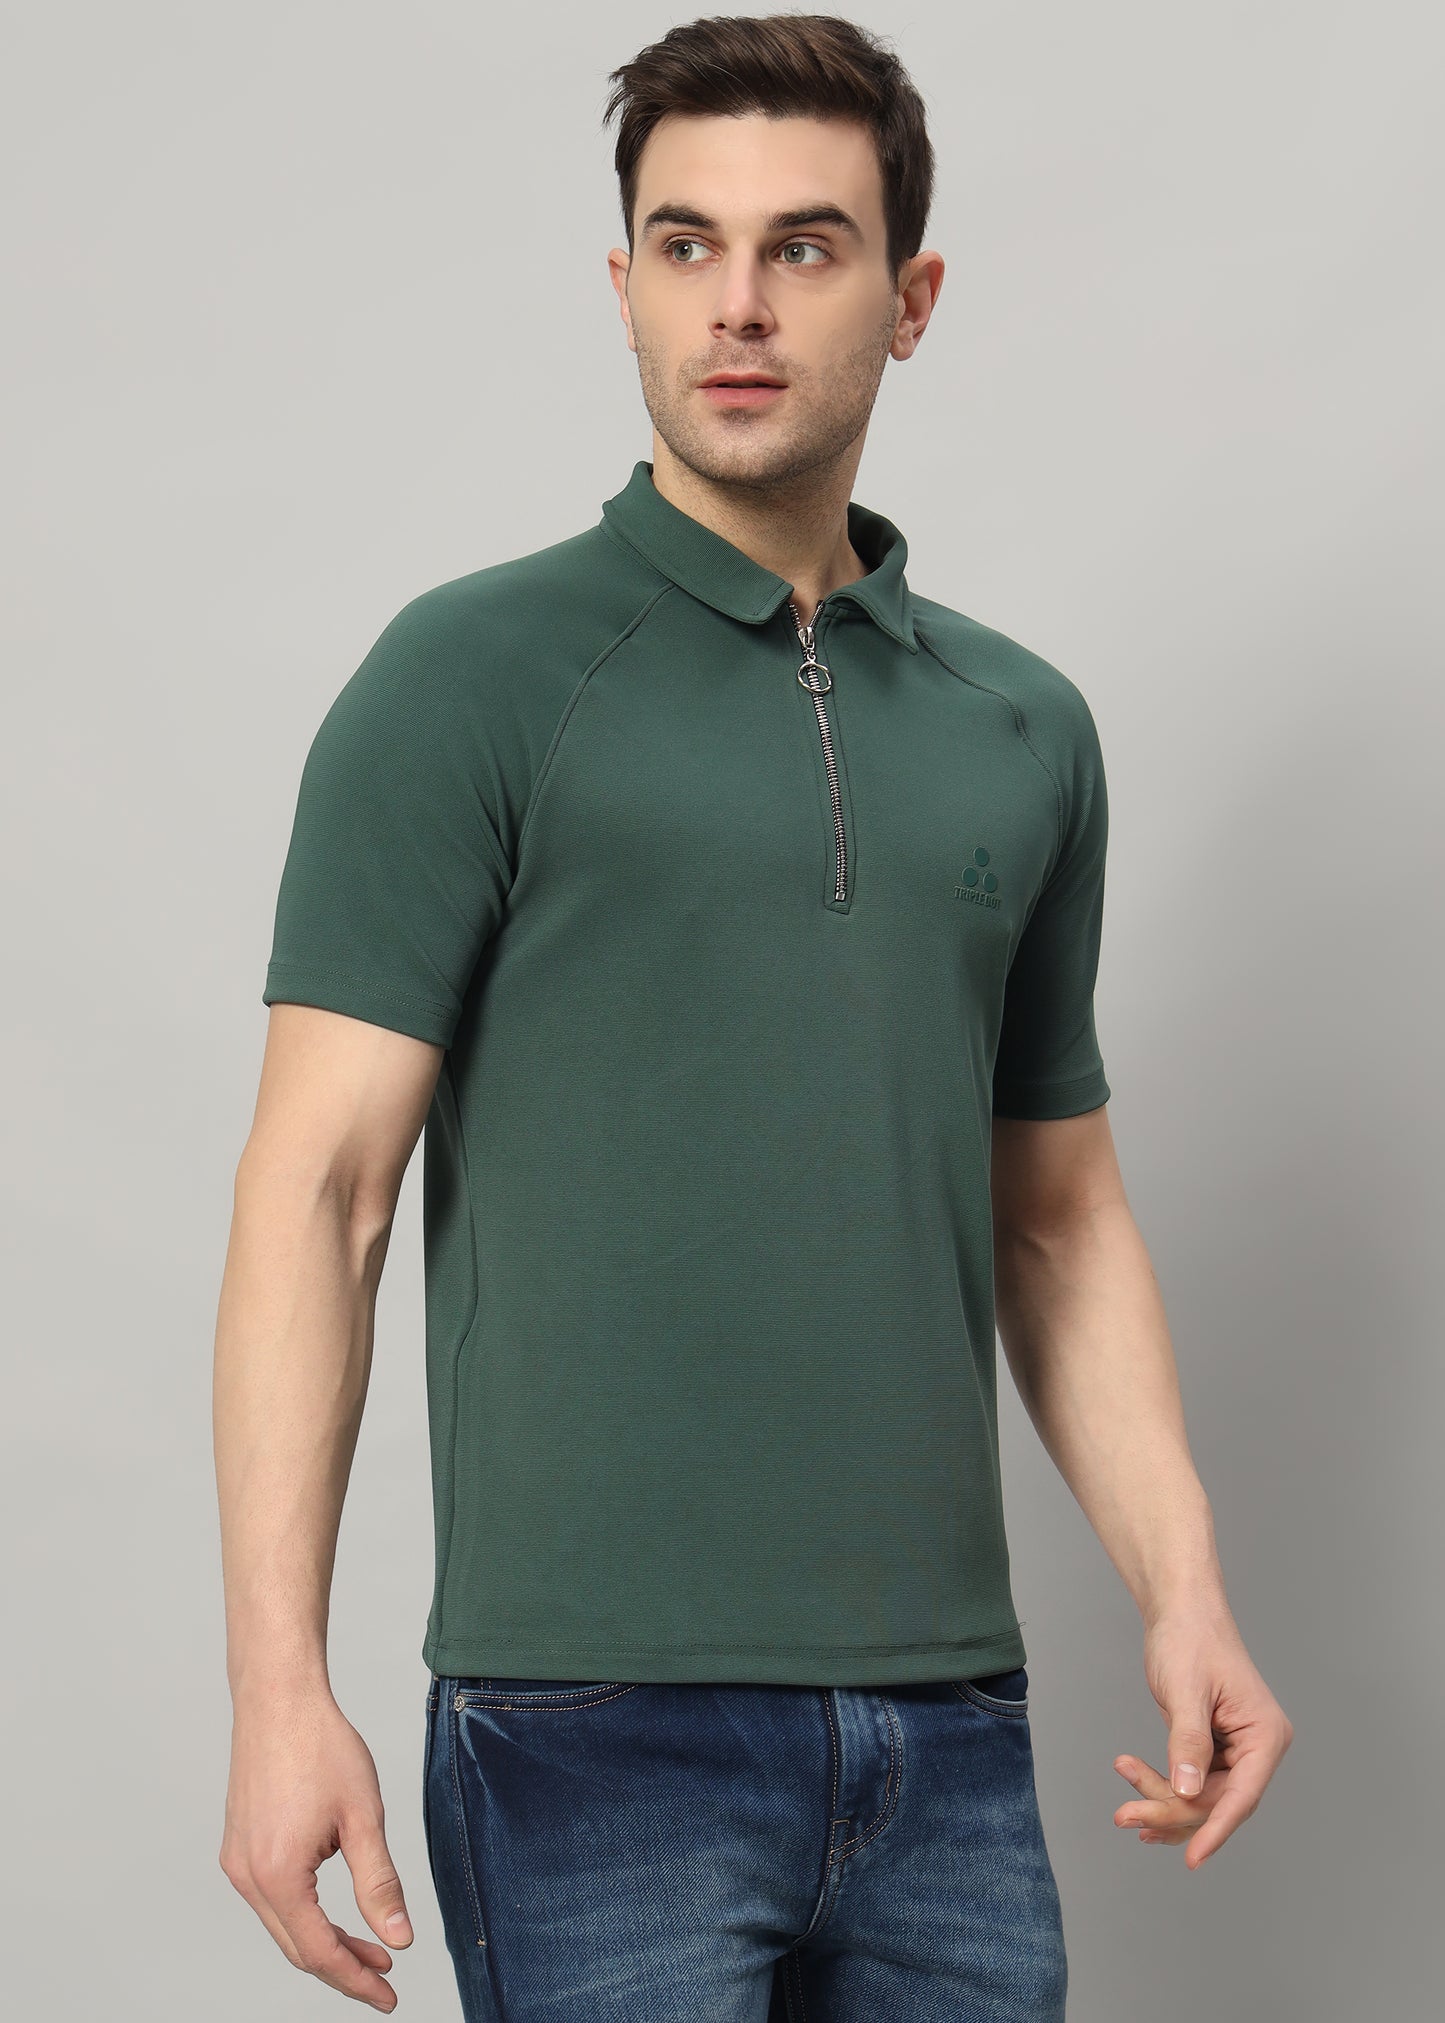 Polo T-Shirt for men's